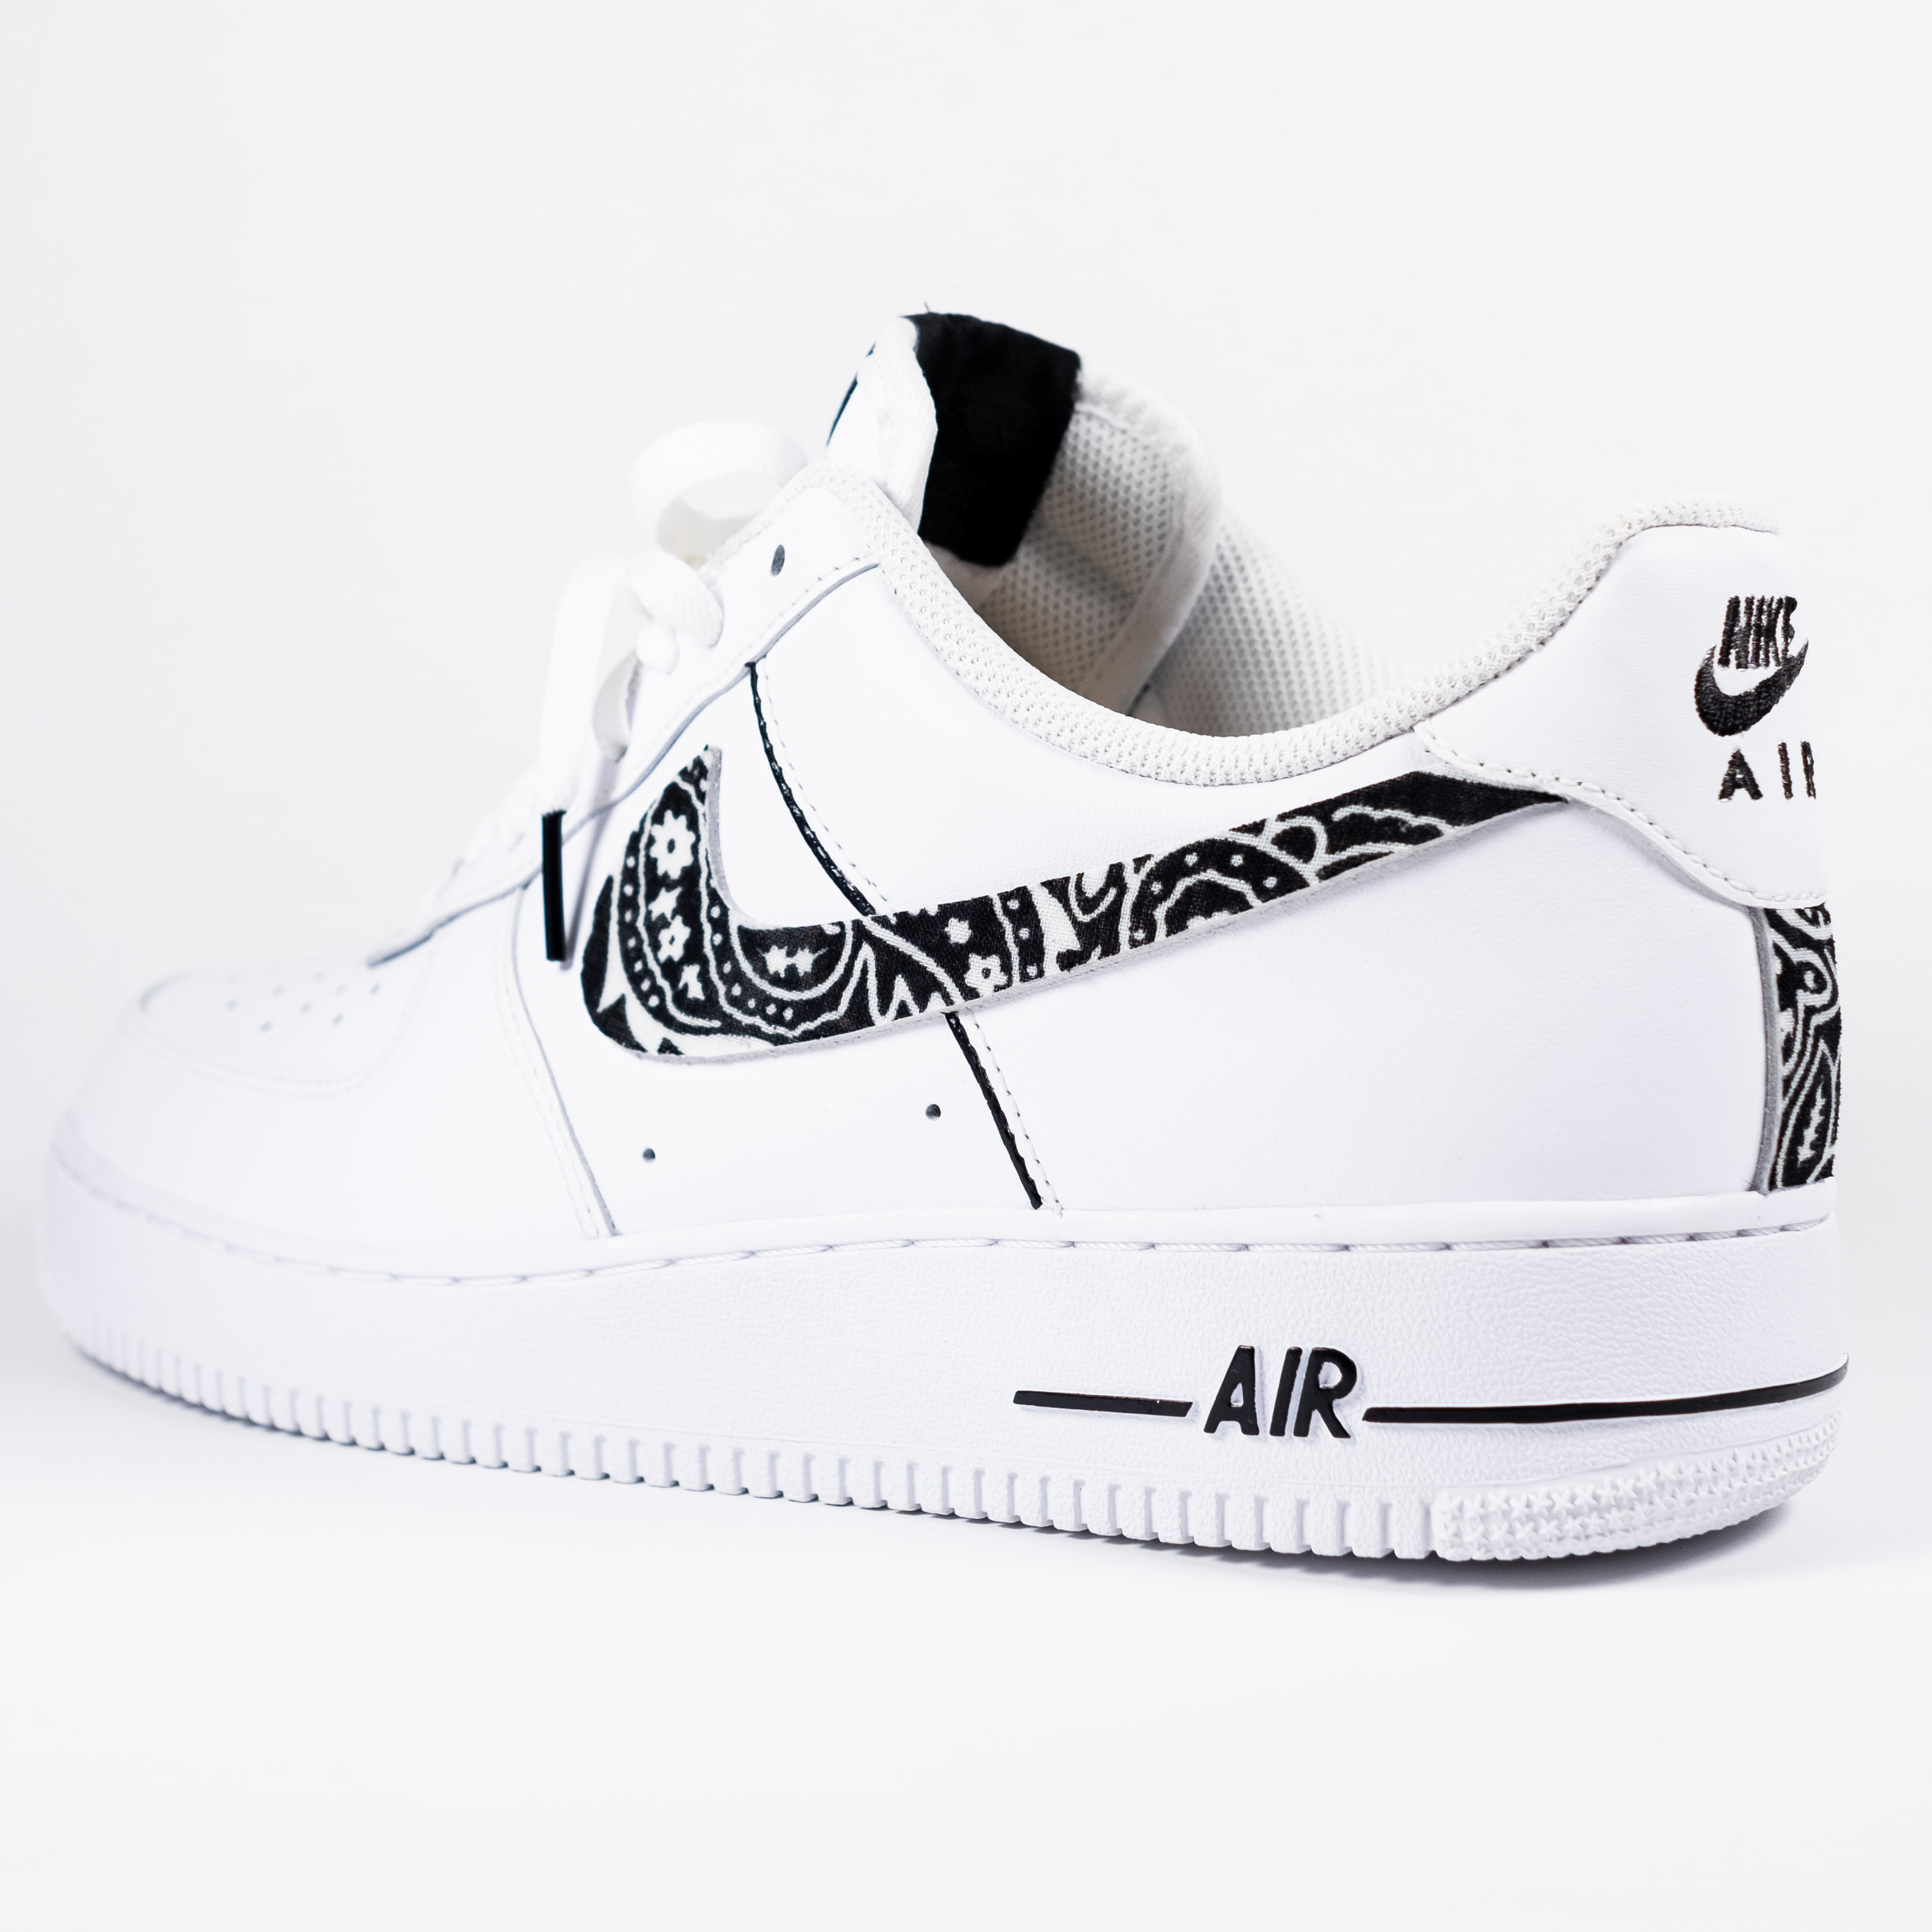 Nike Air Force 1 Low '07 Black/White Shoes - Bandana Fever